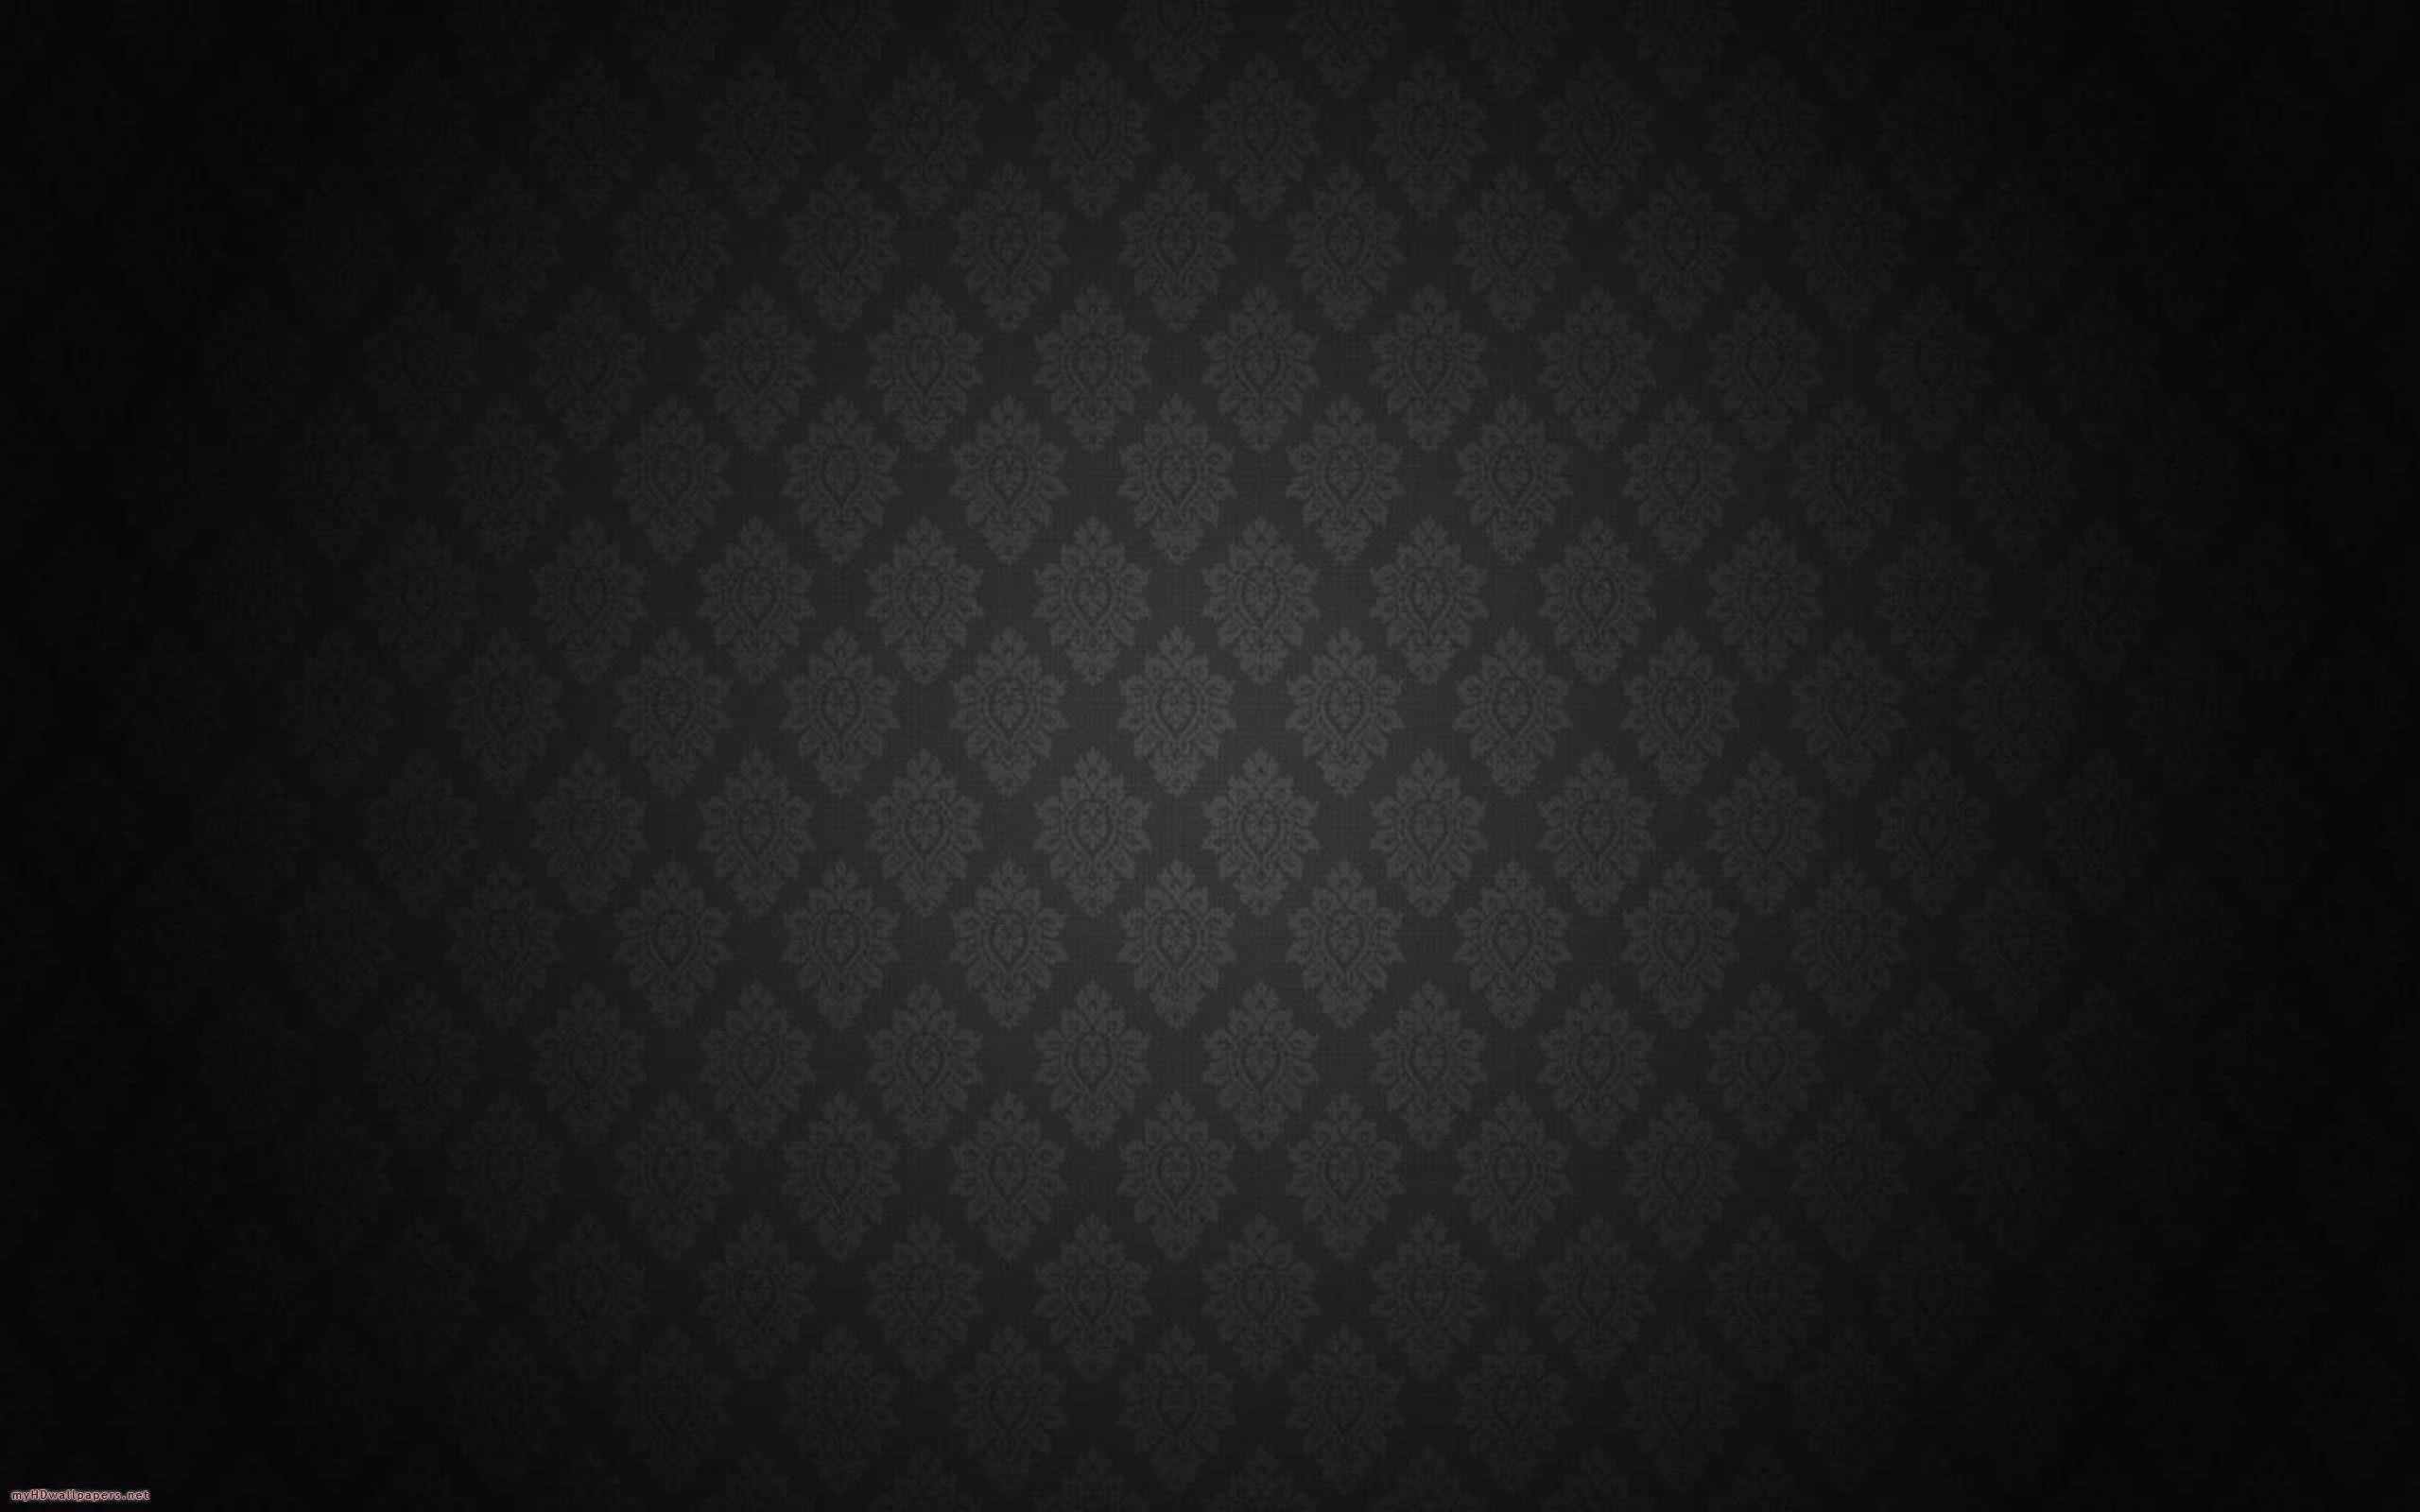 2560x1600 Black Gold Wallpapers - Full HD wallpaper search